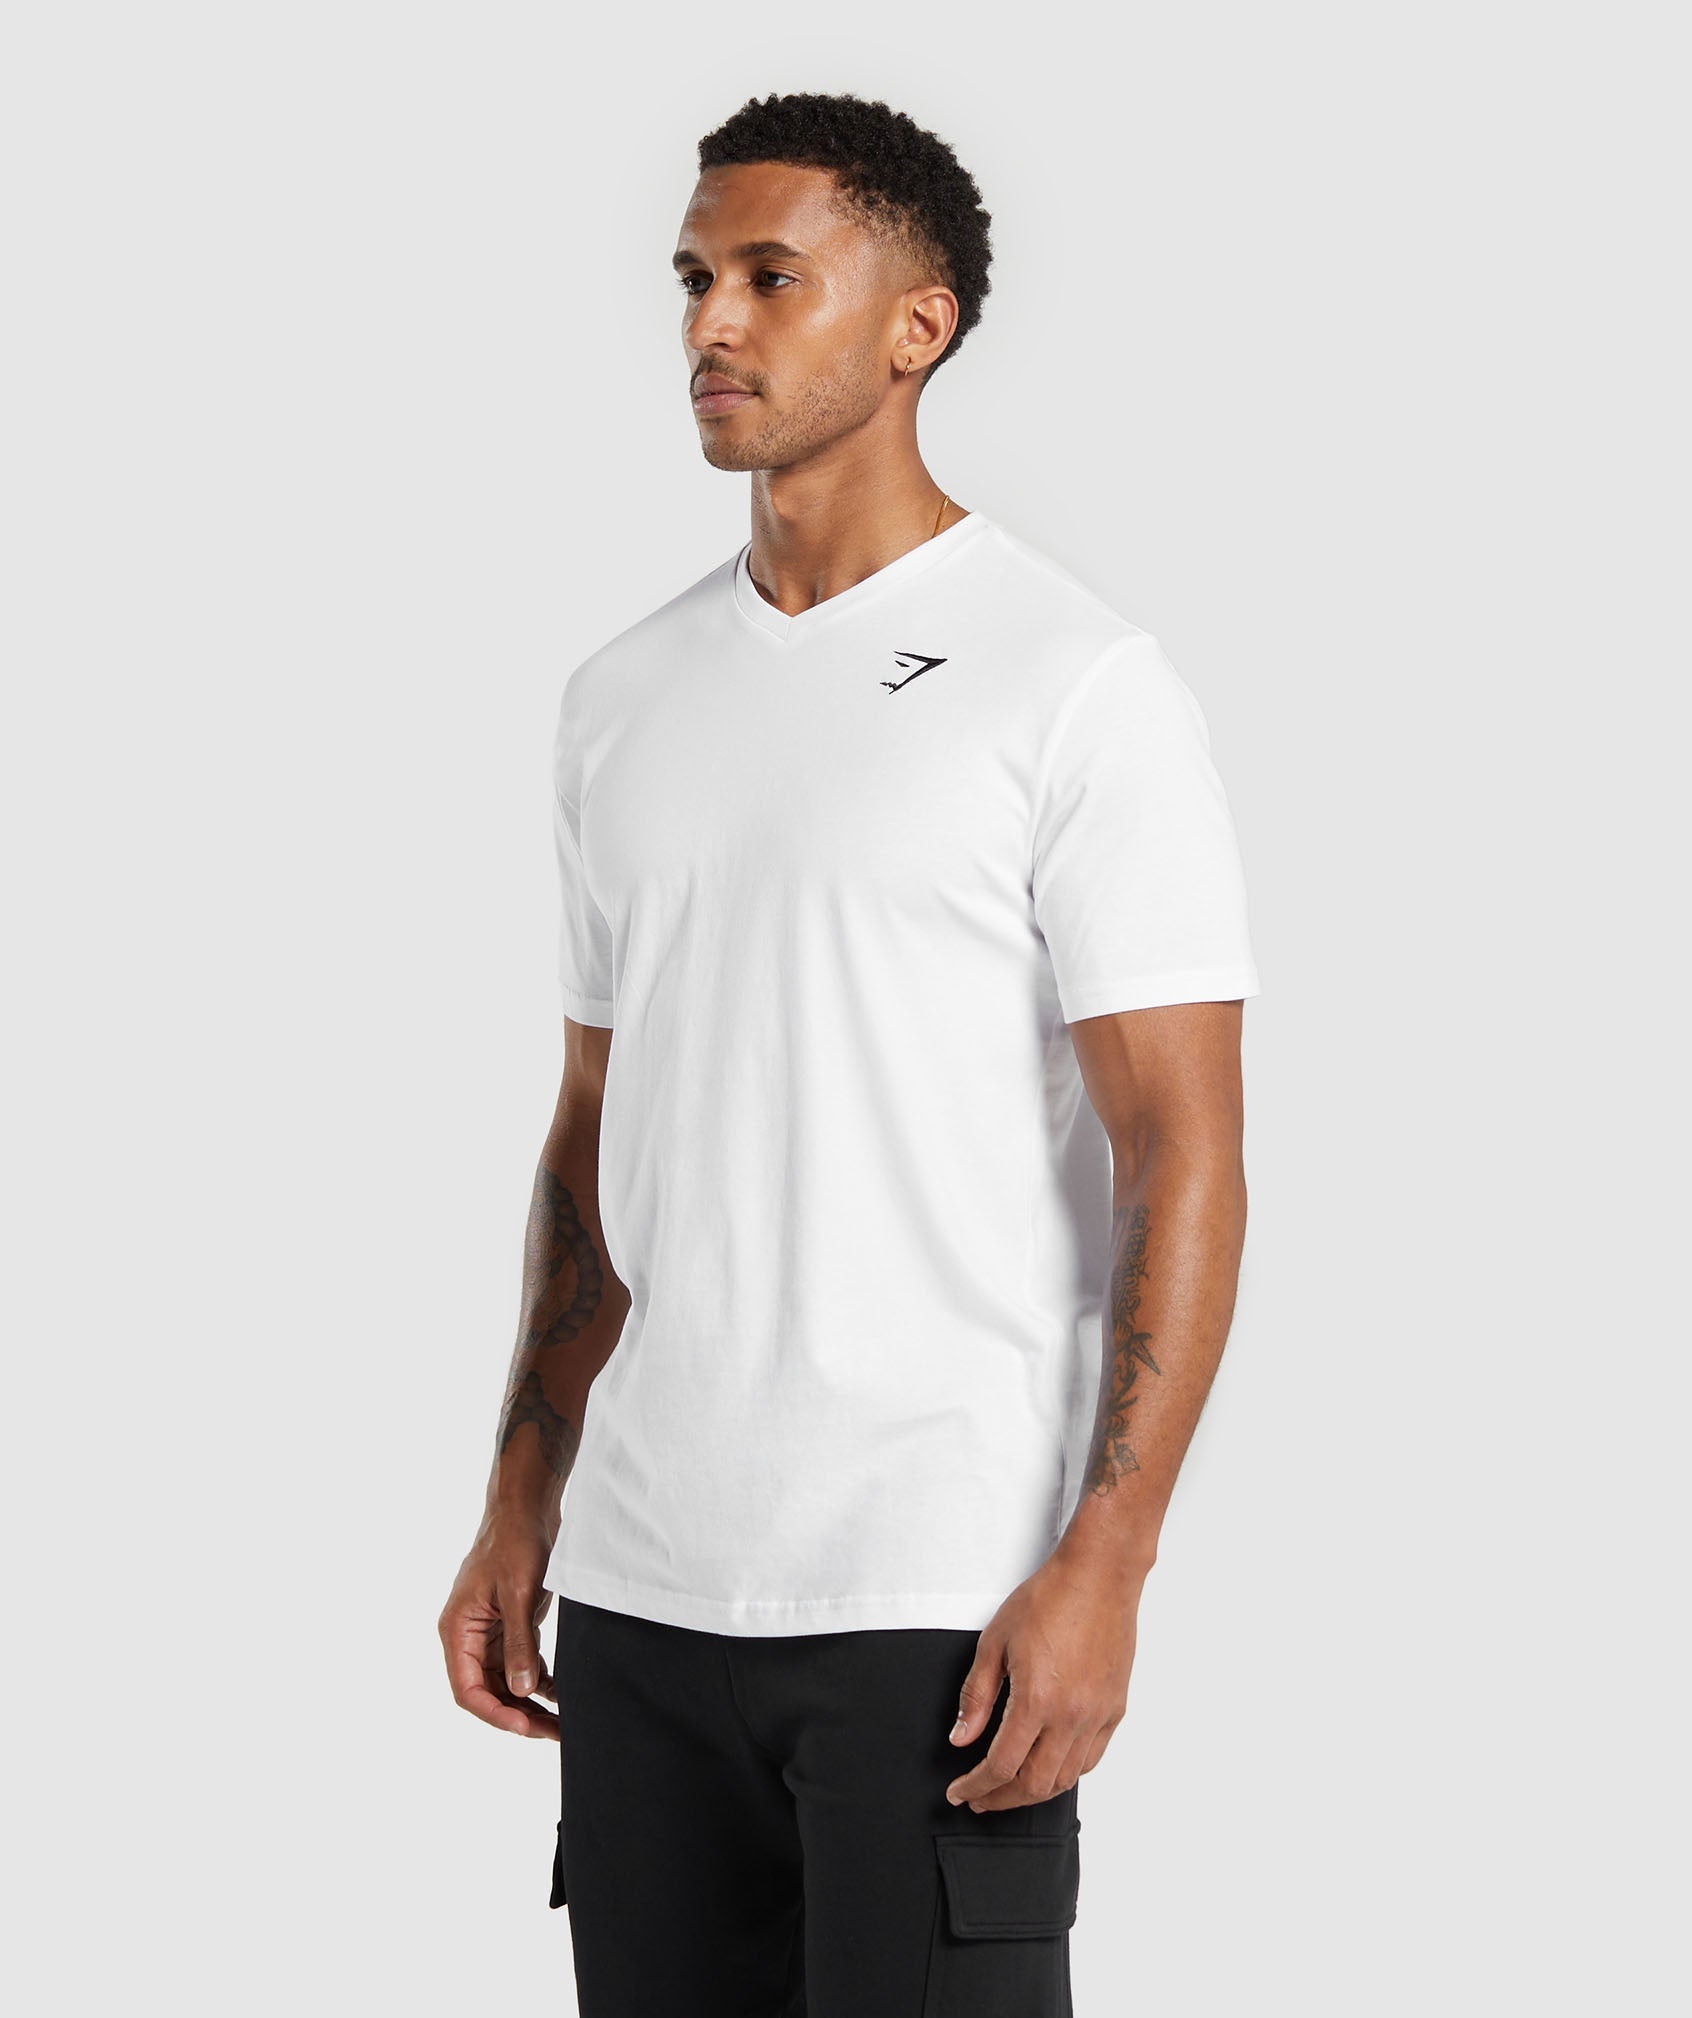 Crest V-Neck T Shirt in White - view 3